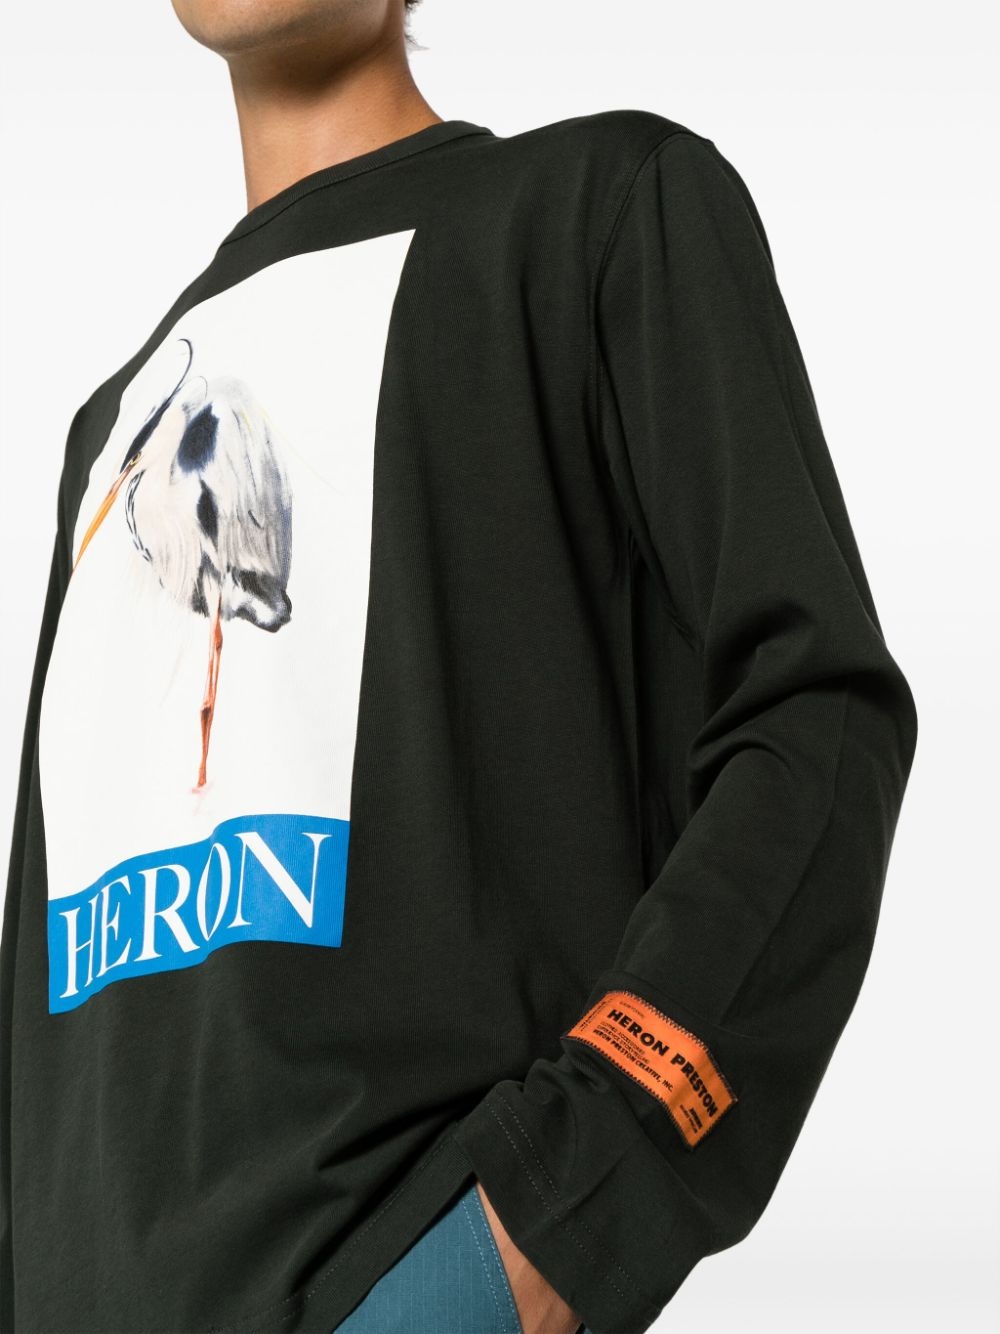 Heron Bird Painted T-shirt - 5